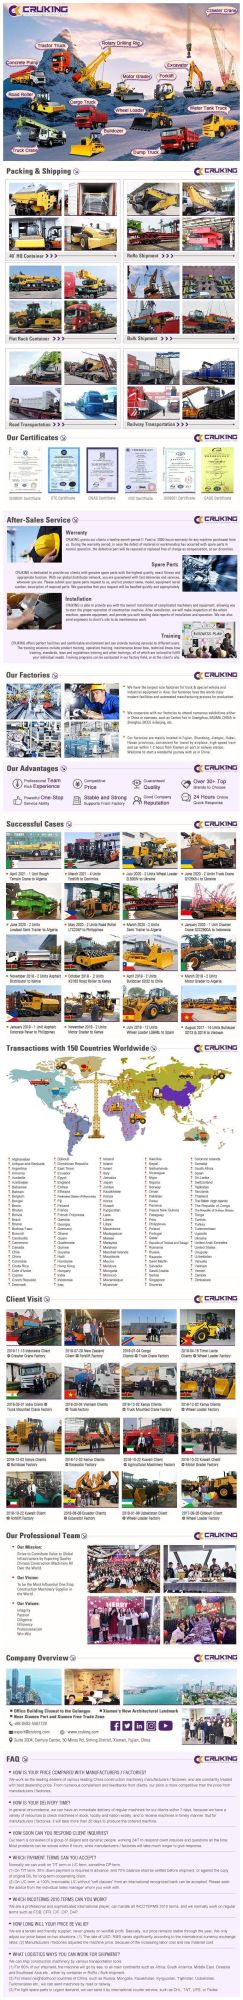 China Construction Machinery Xct130 130 Ton Crane Truck